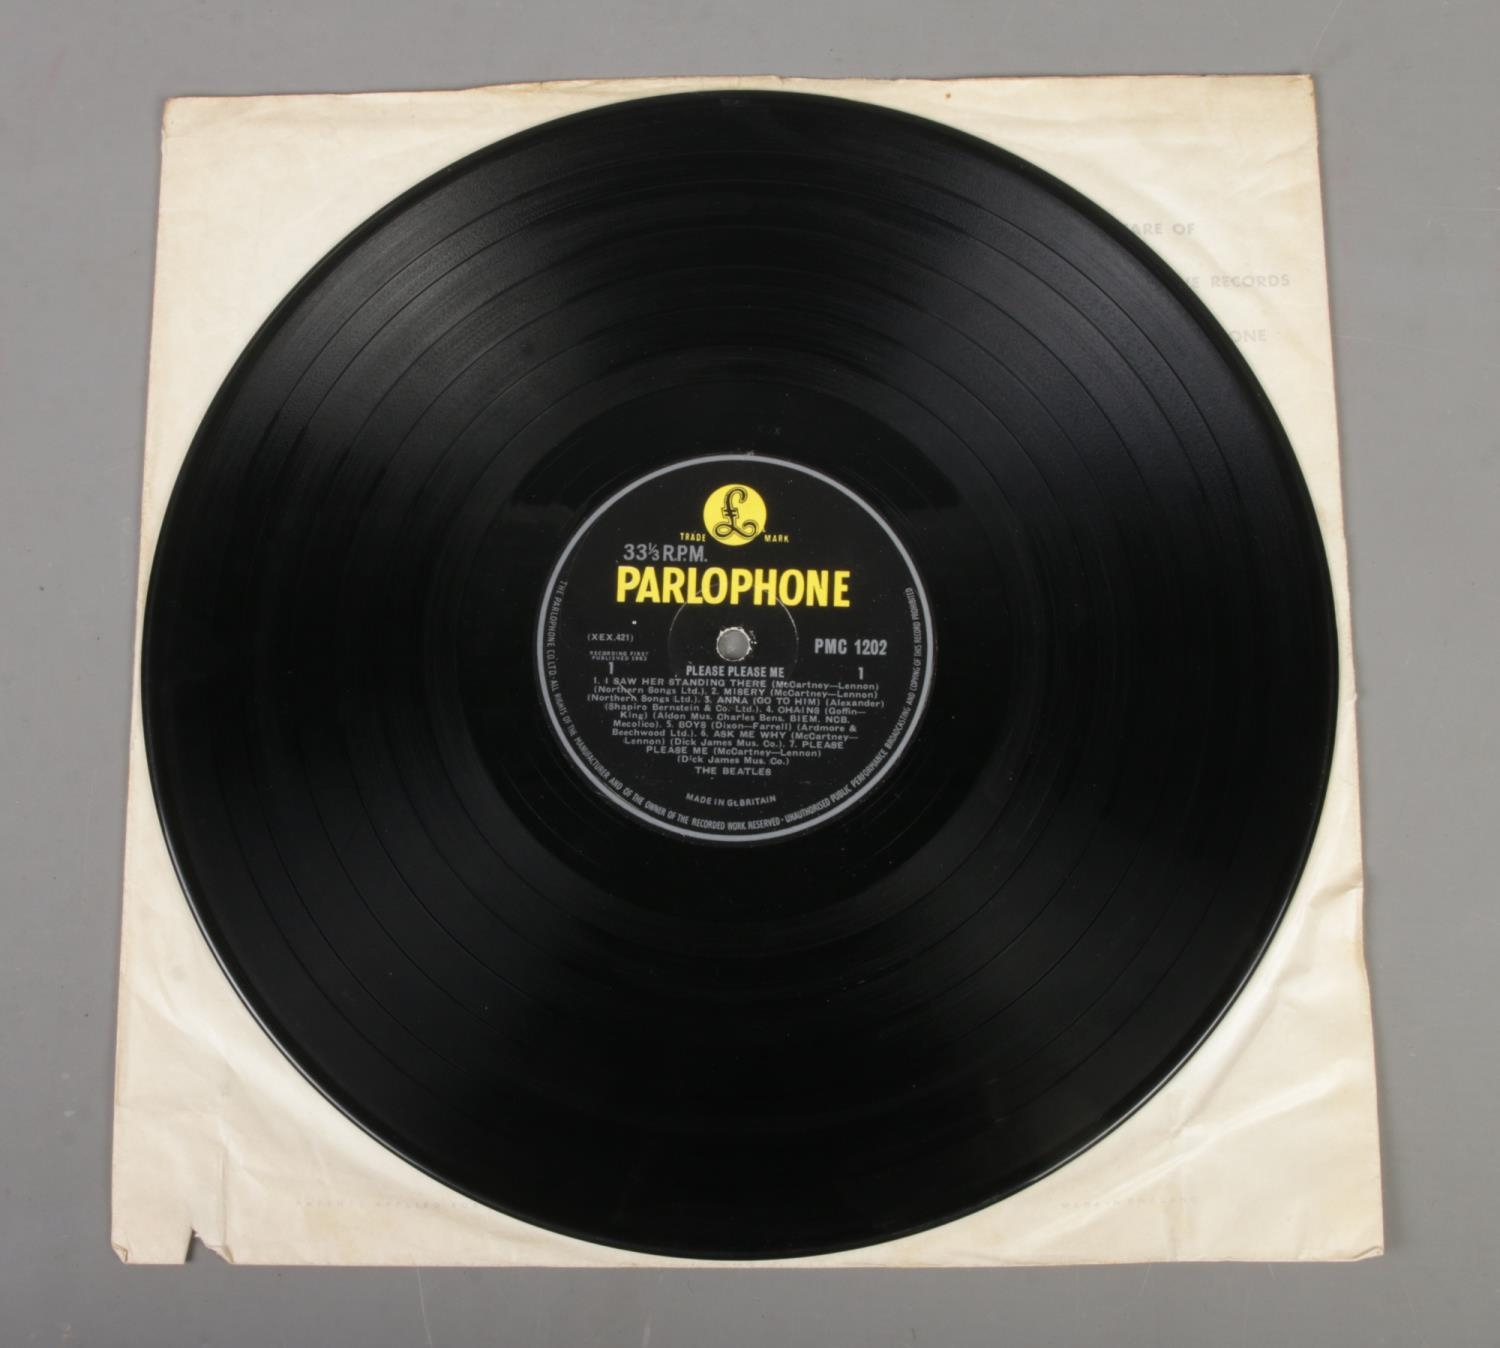 The Beatles Please Please Me vinyl LP record. Mono (PMC 1202) Fourth Pressing, matrix number XEX- - Image 2 of 2